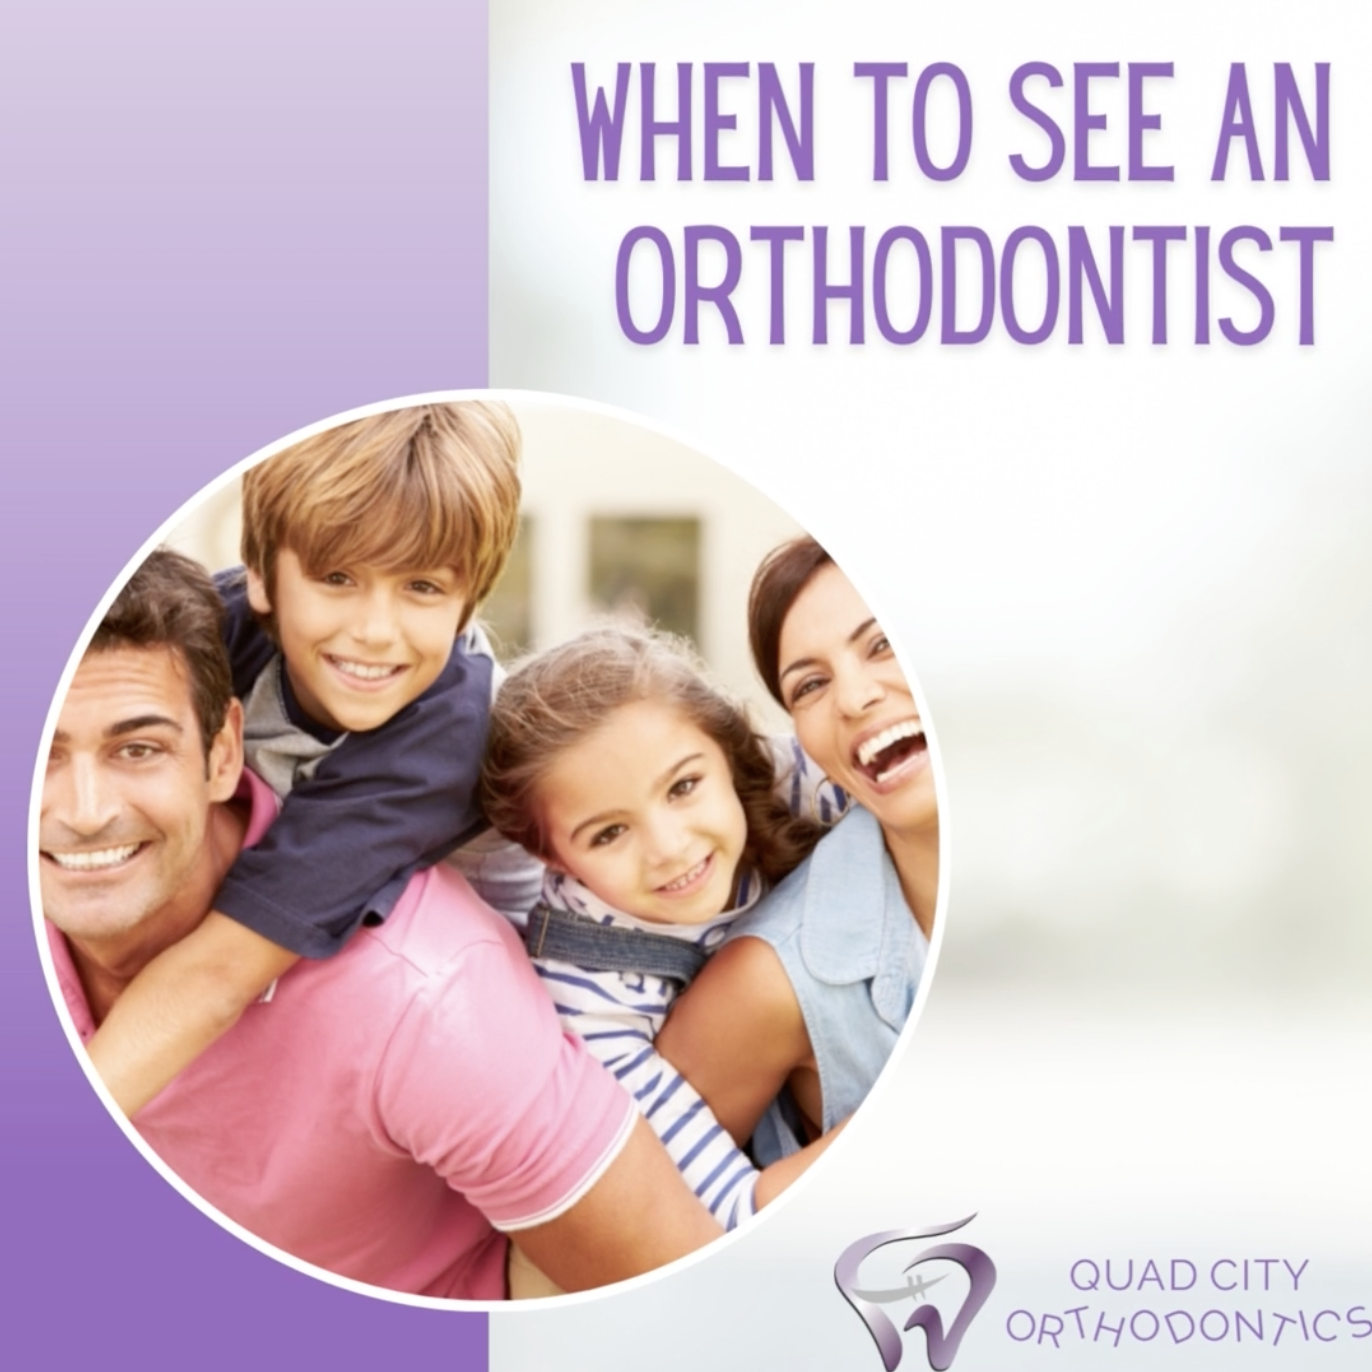 Quad City Orthodontics